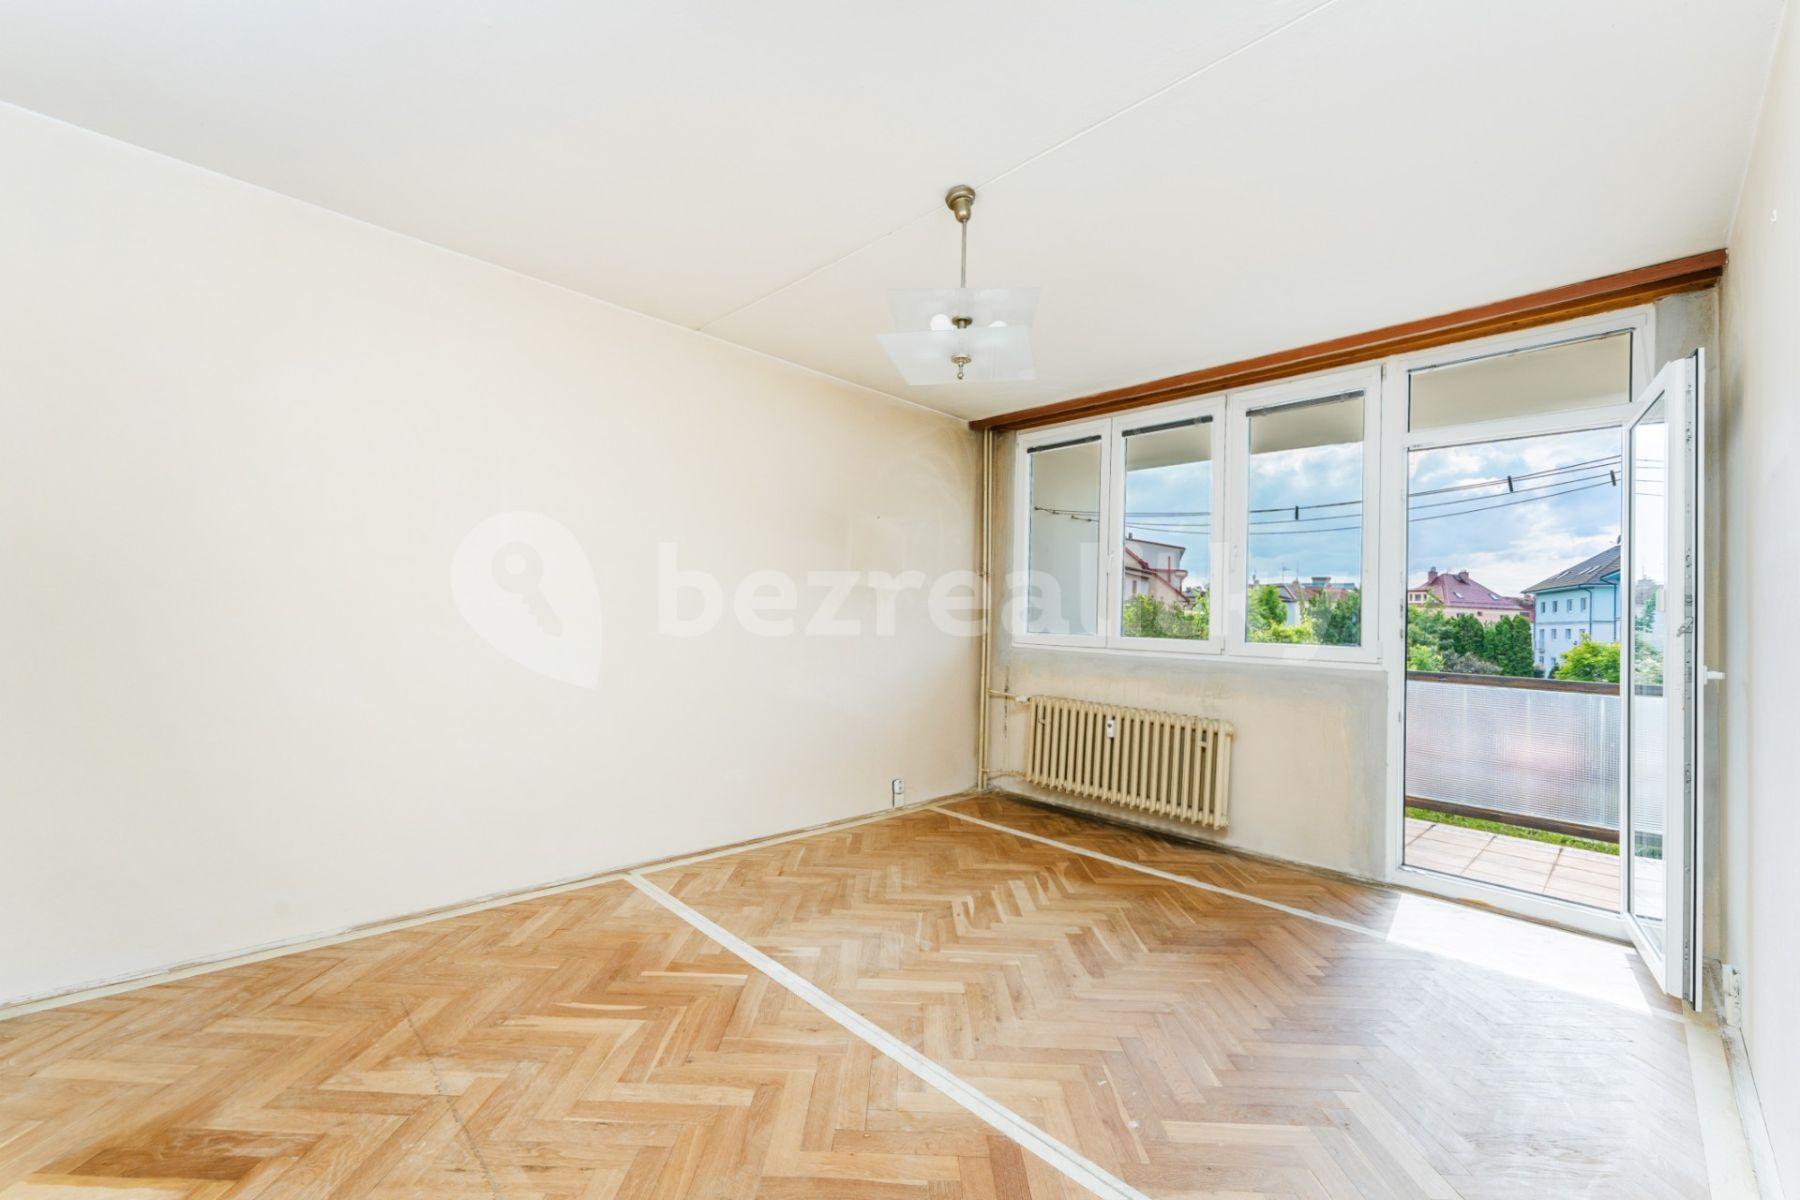 3 bedroom flat for sale, 78 m², U Dvojdomů, Prague, Prague